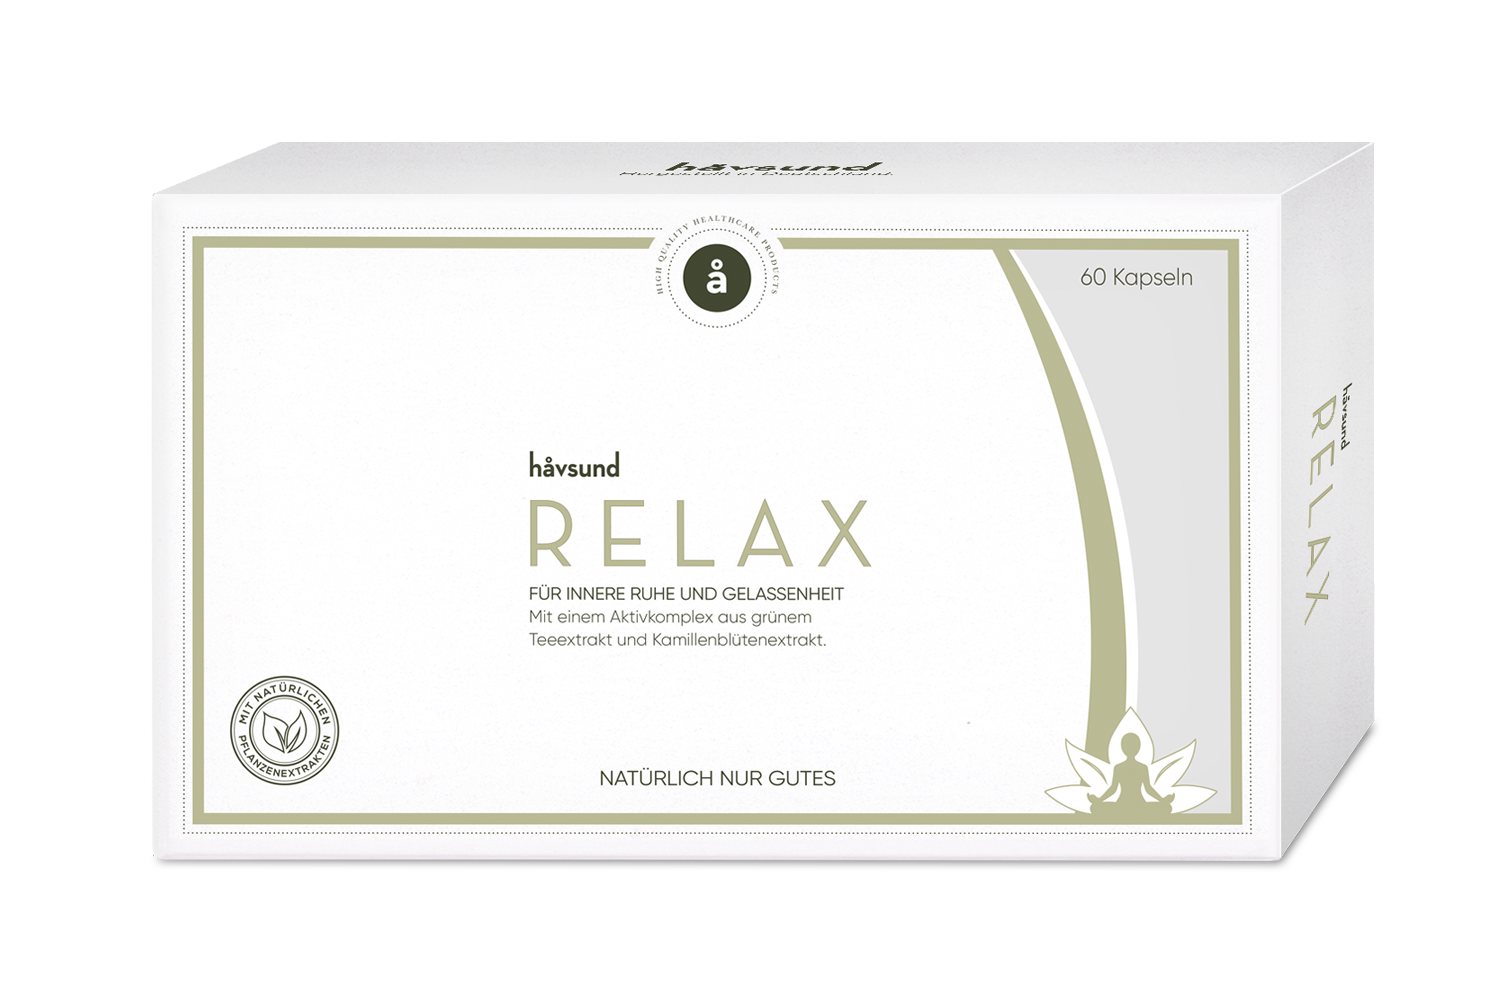 håvsund Relax product image